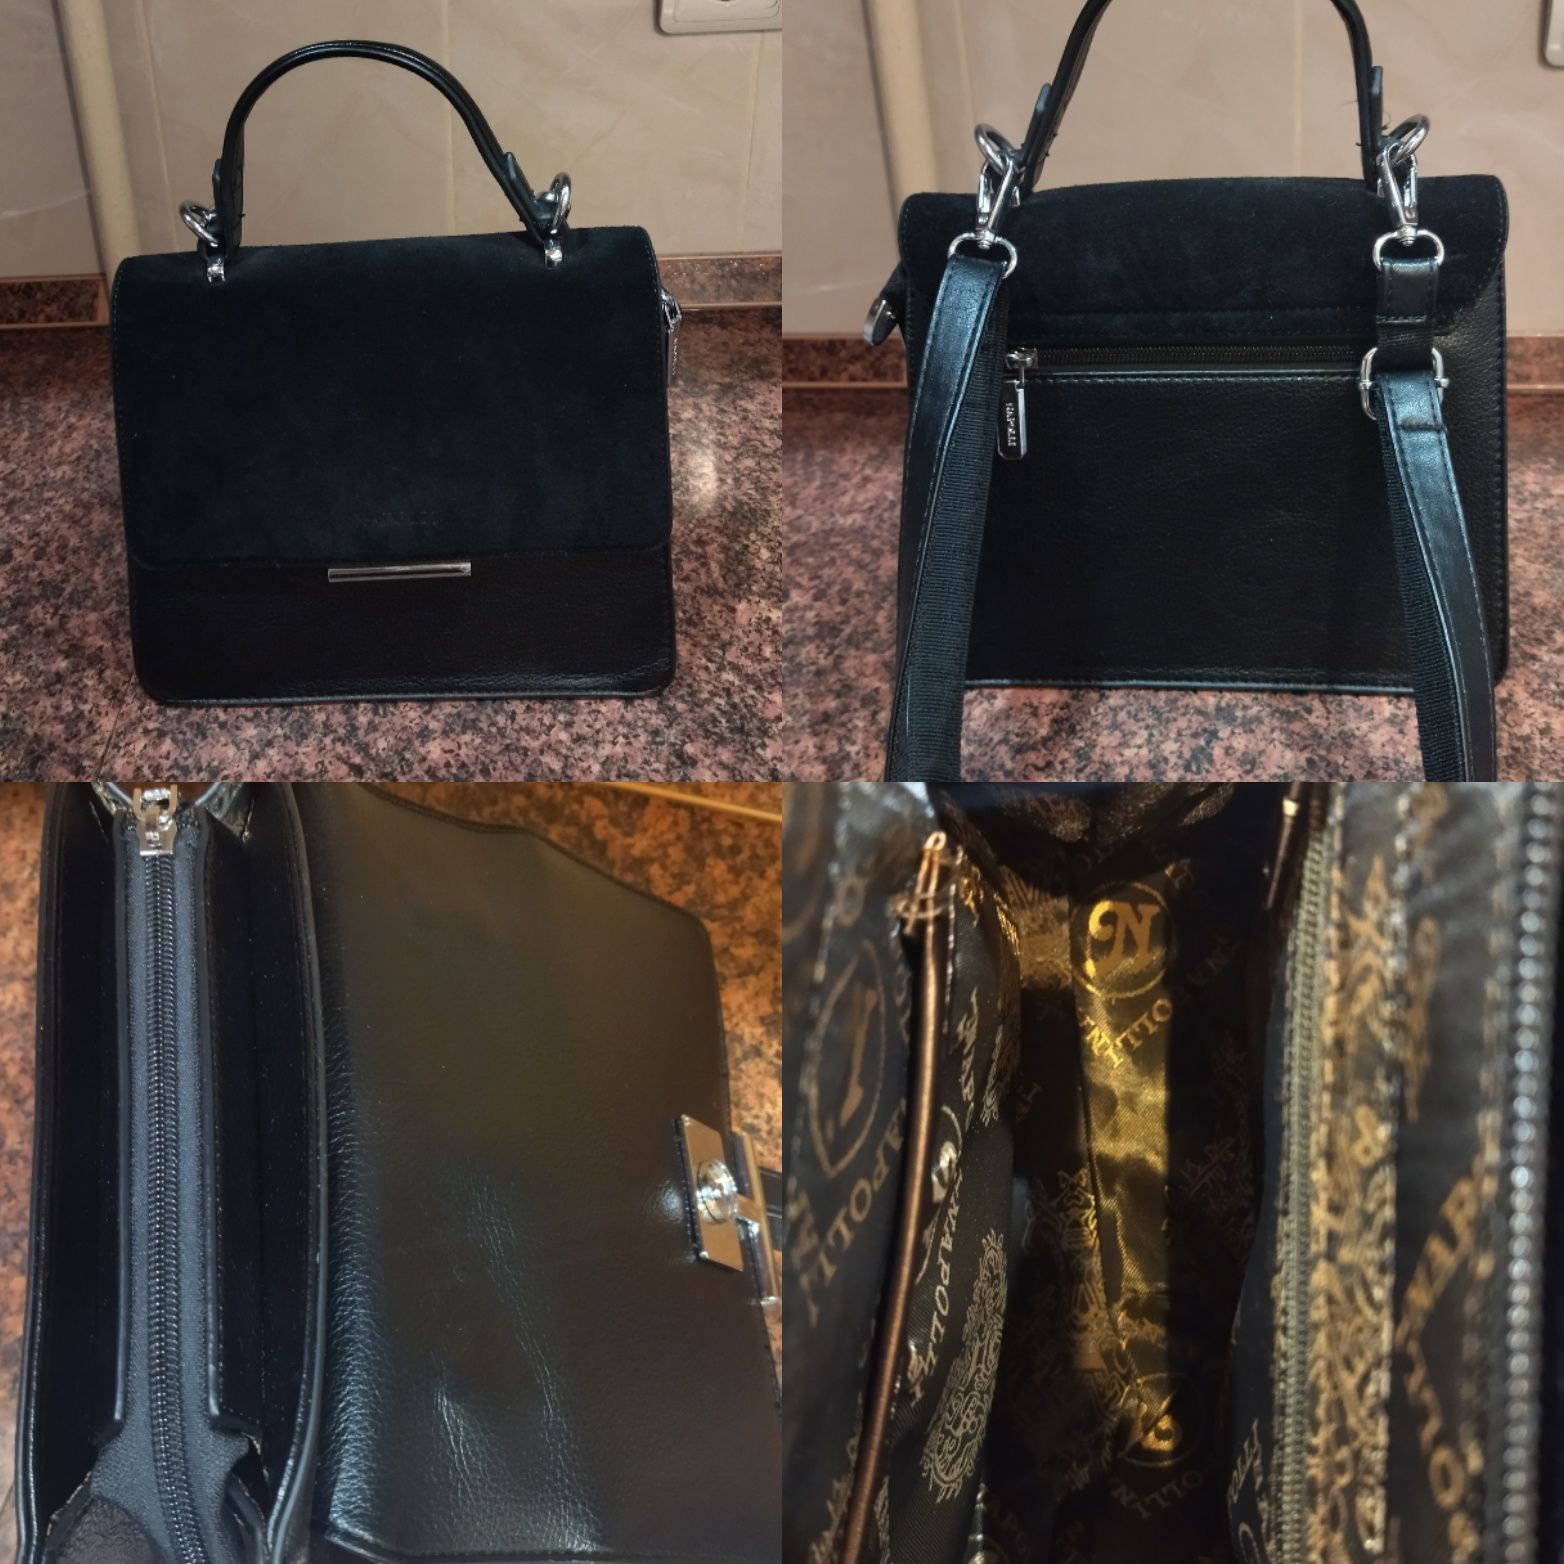 Дамская сумочка чёрного цвета